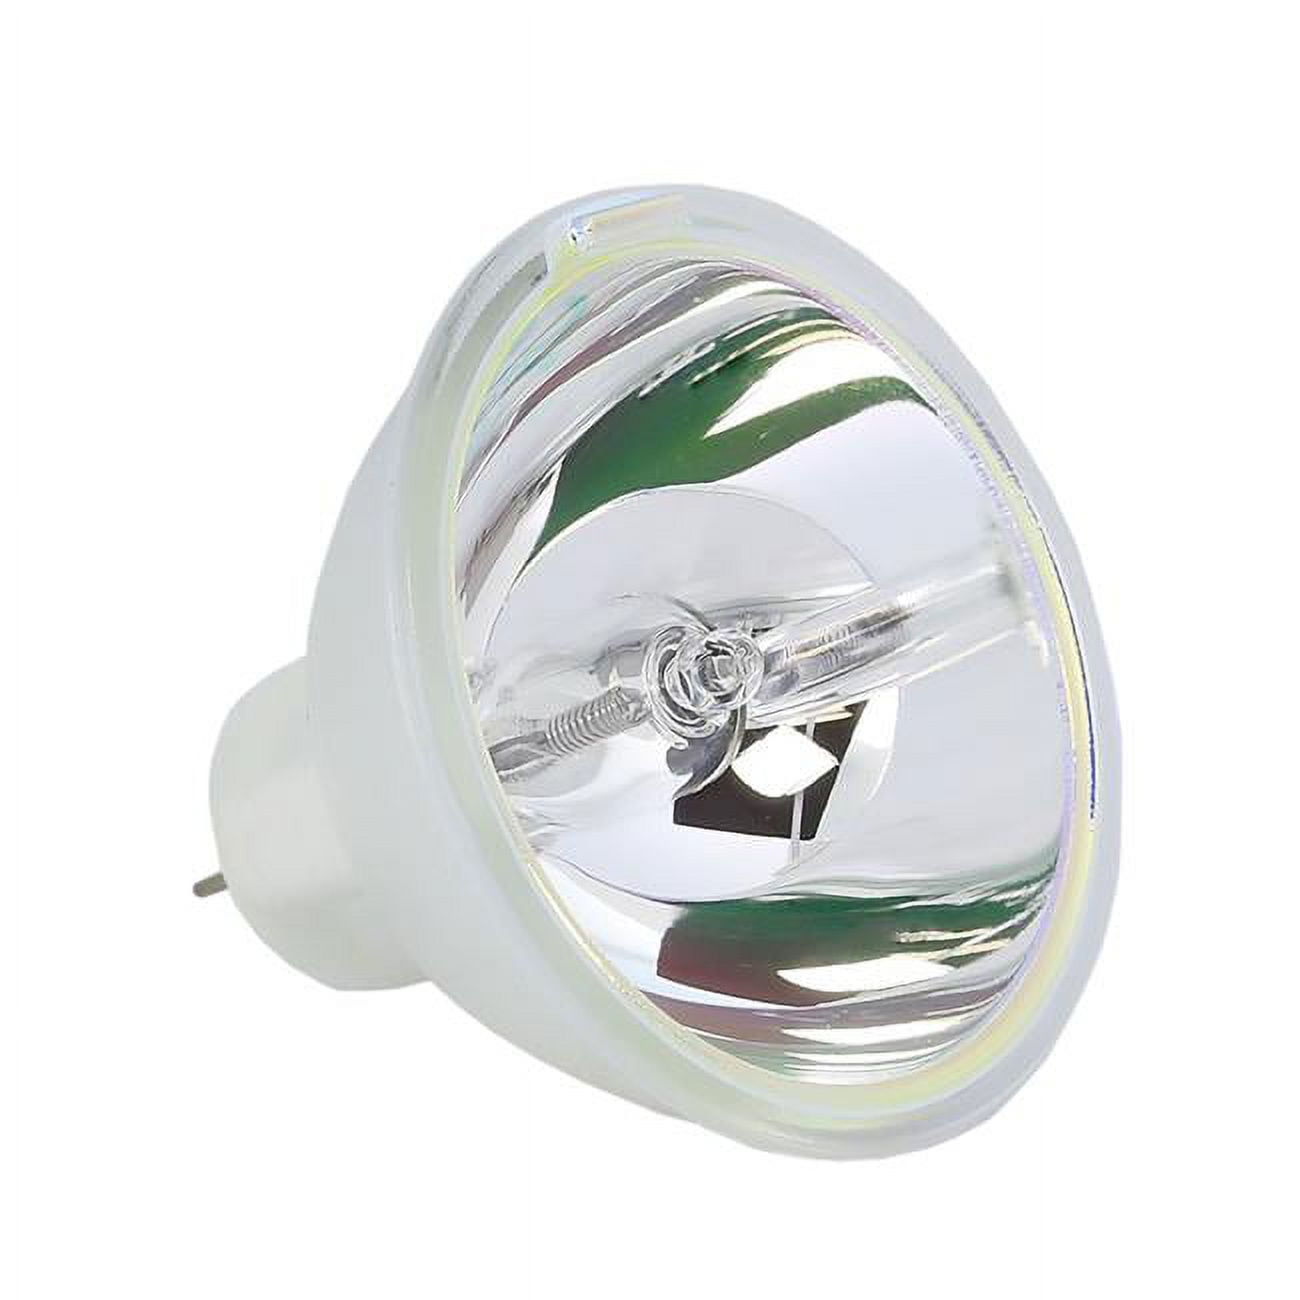 Dny-170221 Halogen Reflector Jcr 15v 150w H5 Light Bulb